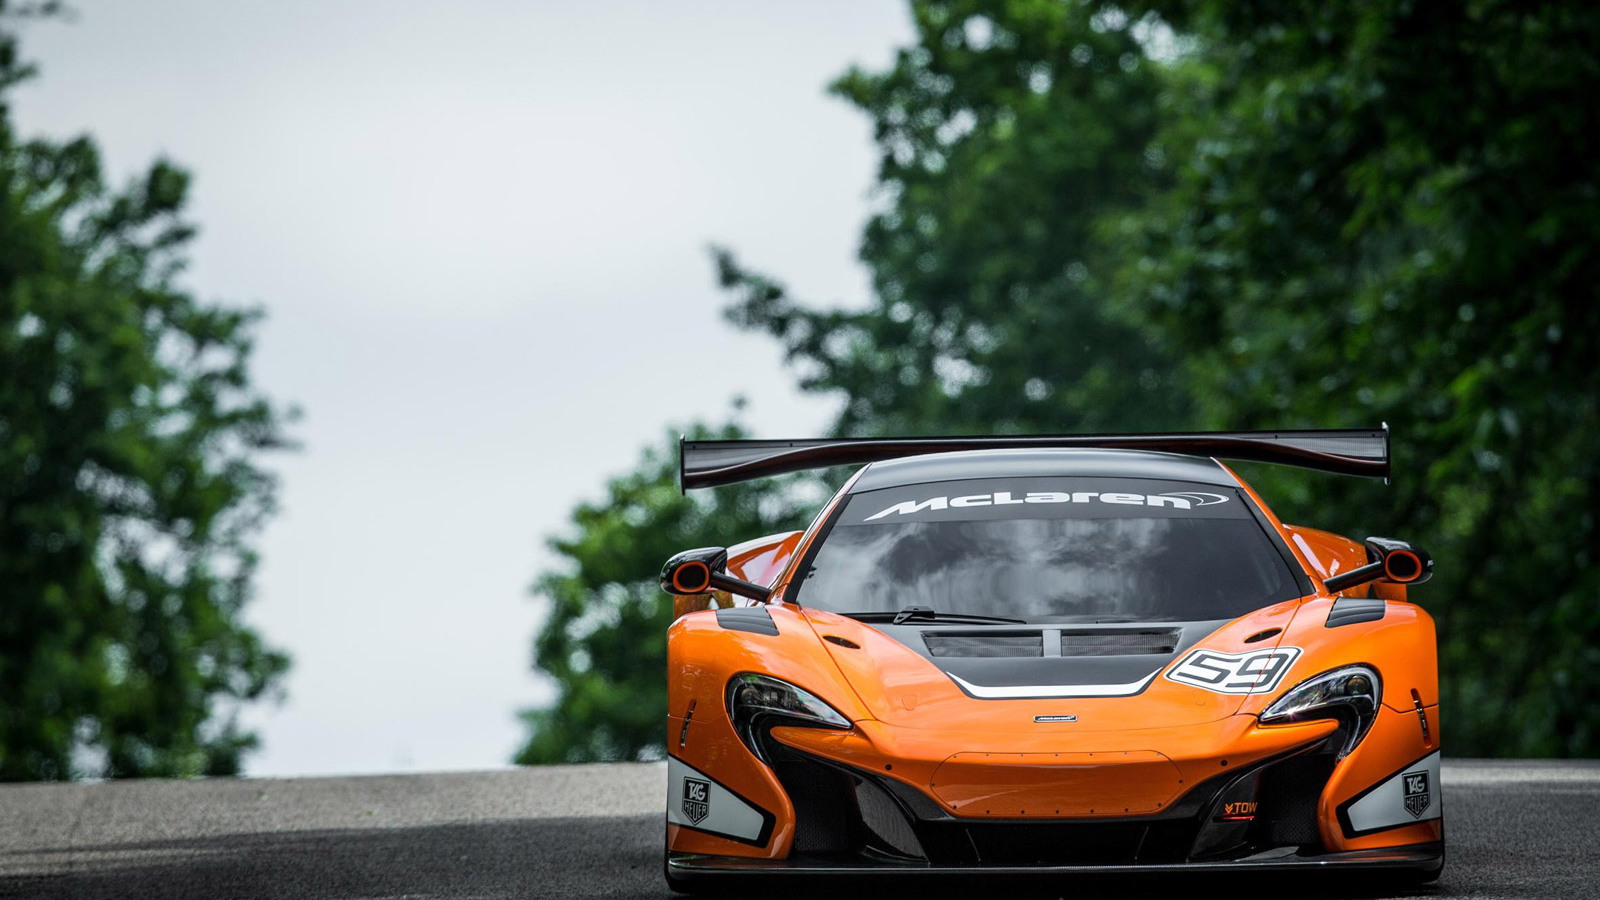 2015 McLaren 650S GT3 race car